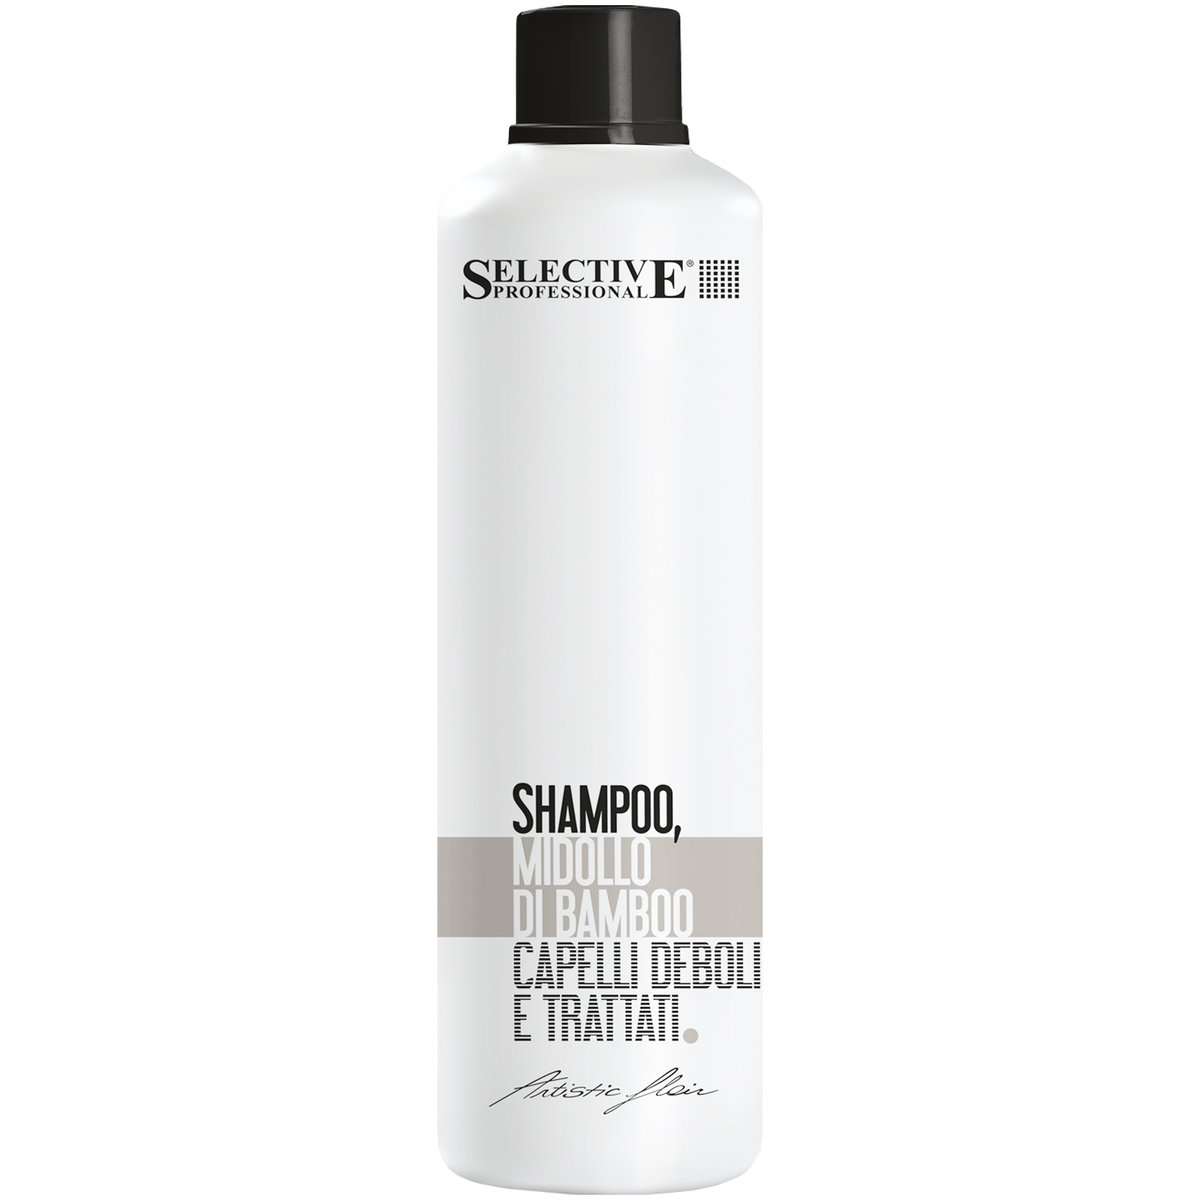 Selective professional Artistic Flair Midollo Bamboo szampon wzmacnia 1000ml AF-MIDOLLO-BAMBOO